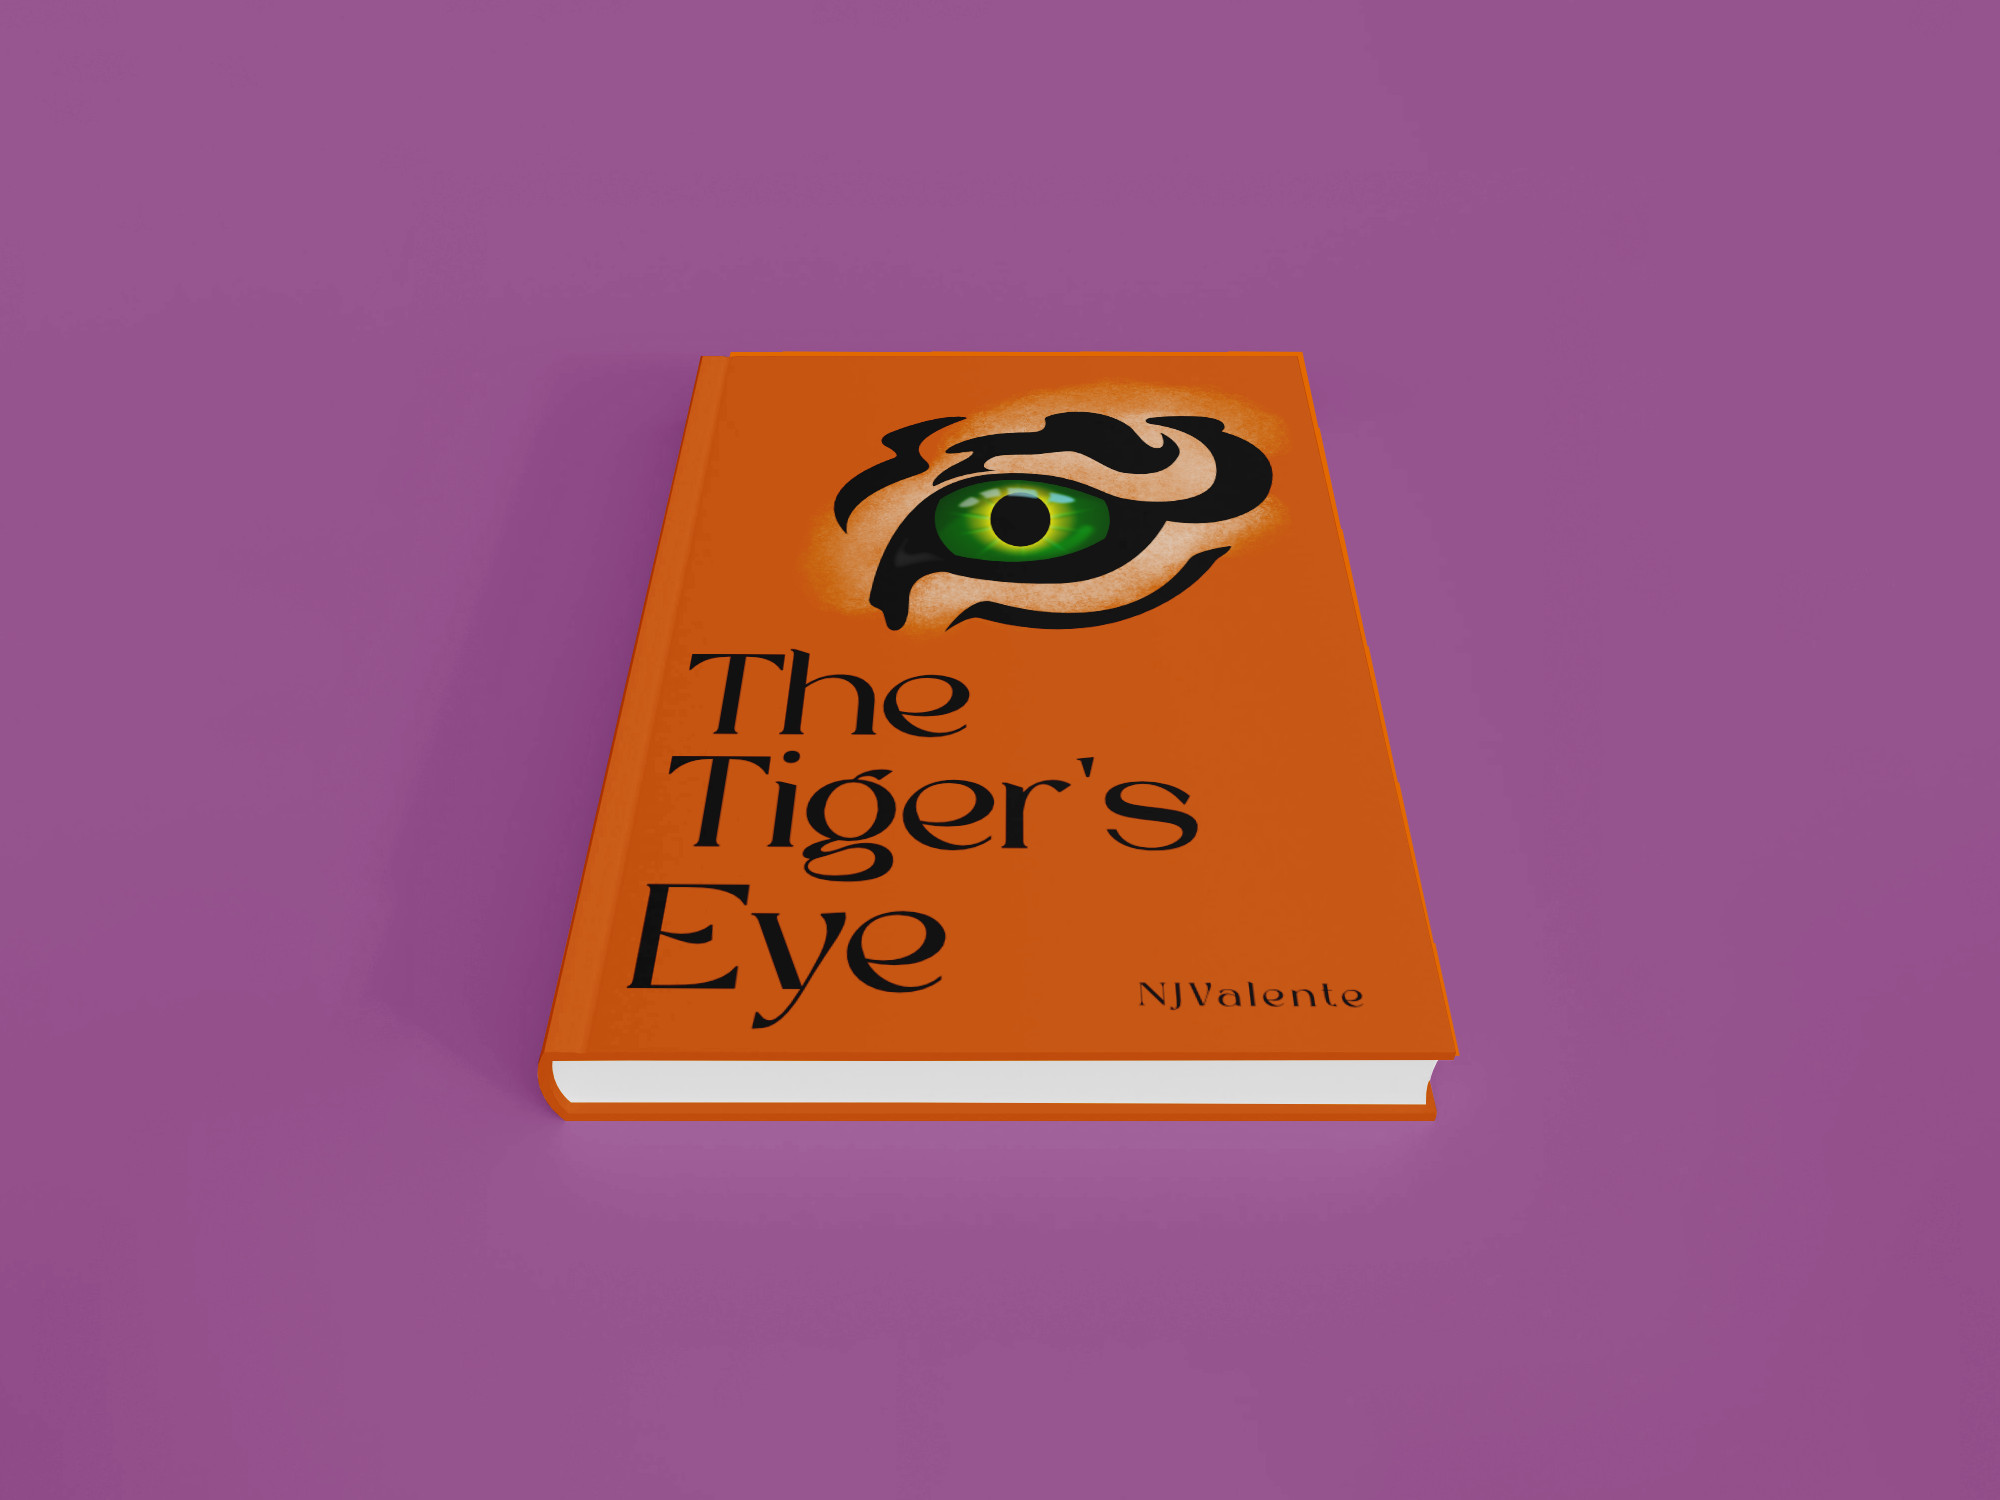 The Tiger's Eye book cover illustration mock up.